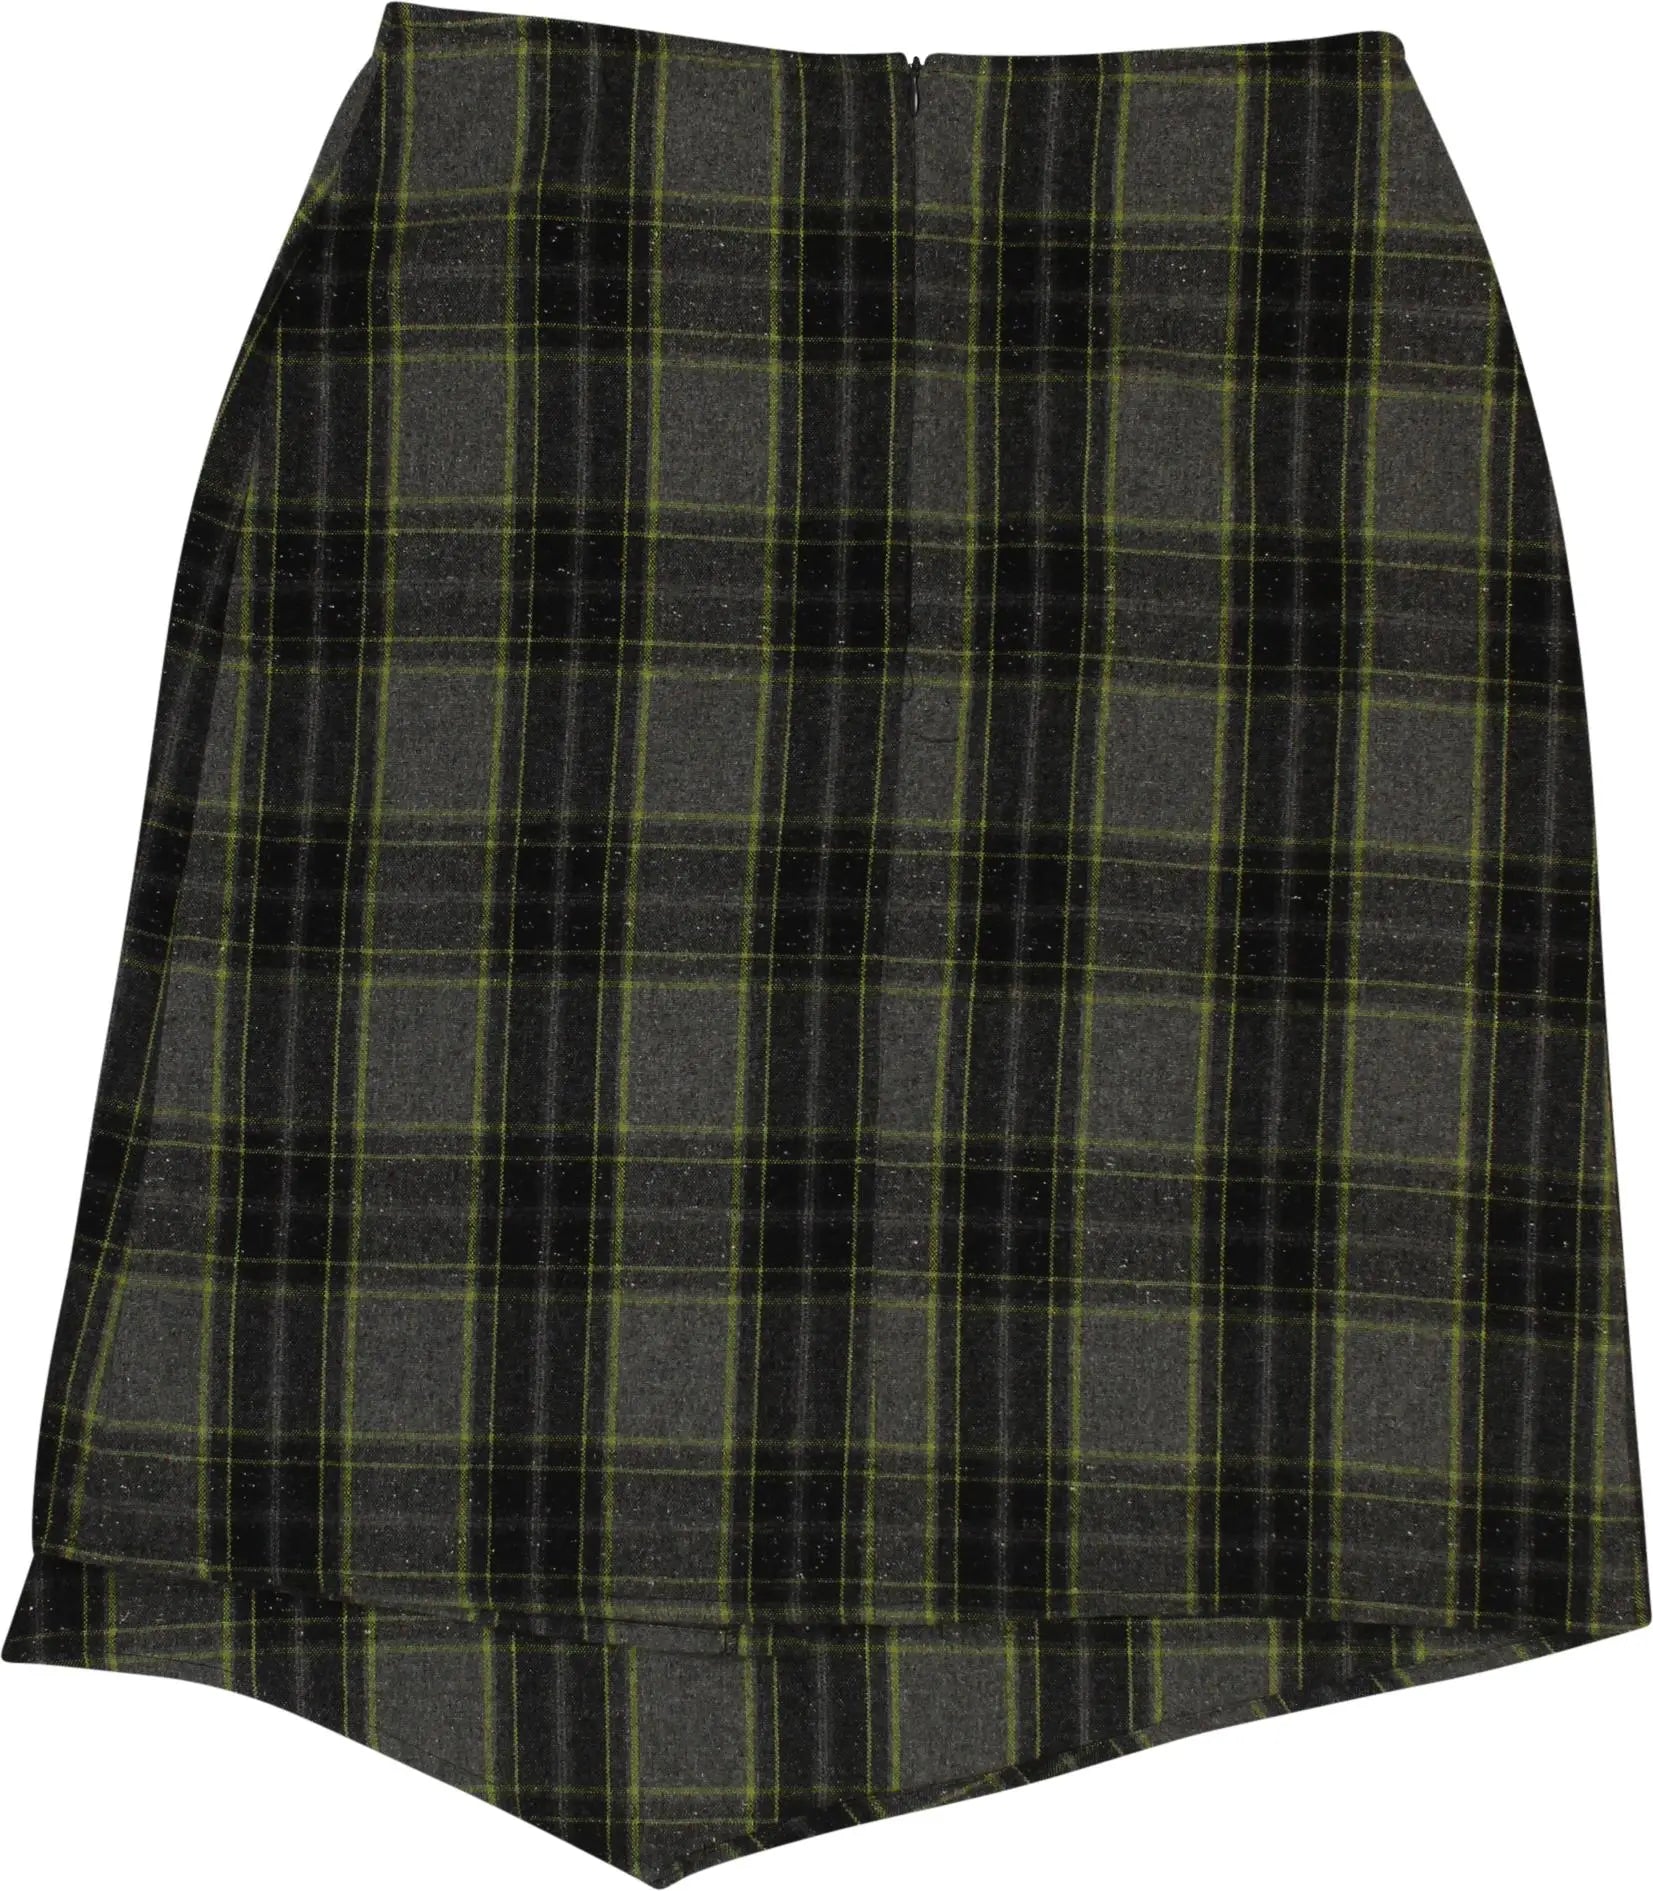 Bien Bleu - Checkered A-line skirt- ThriftTale.com - Vintage and second handclothing